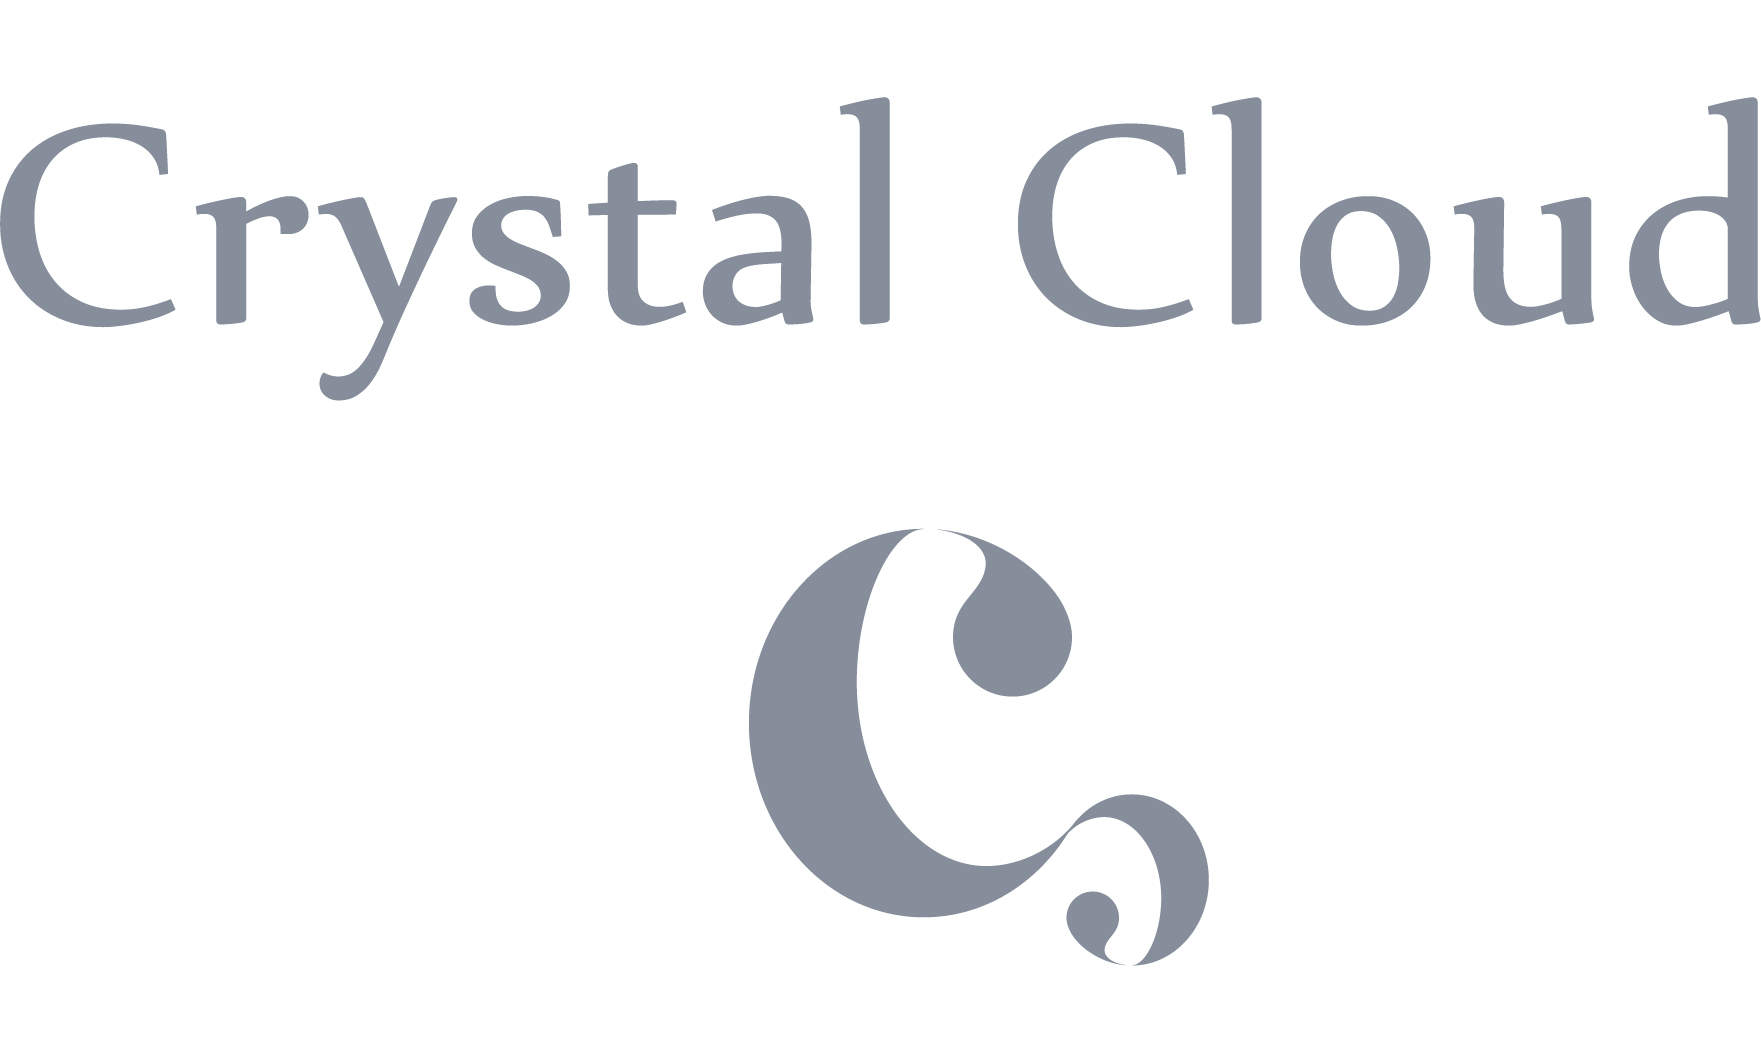 CrystalCloud